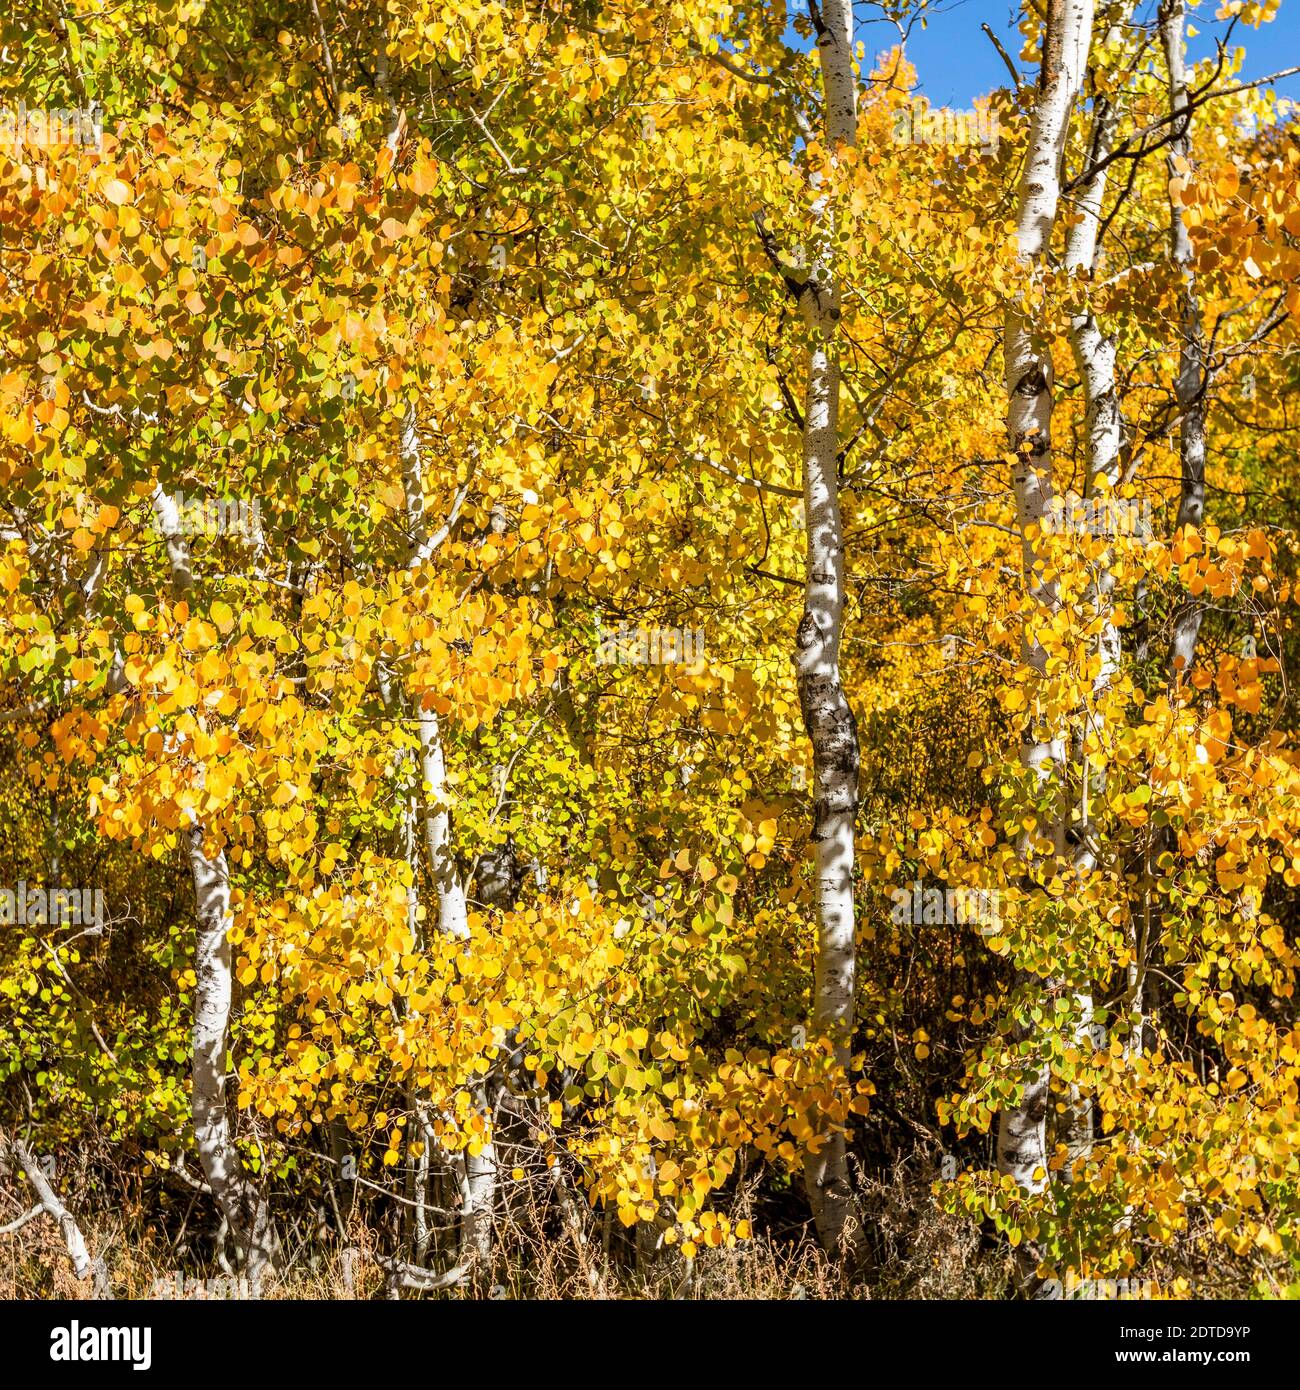 USA, Idaho, Sun Valley, Yellow aspen trees Stock Photo